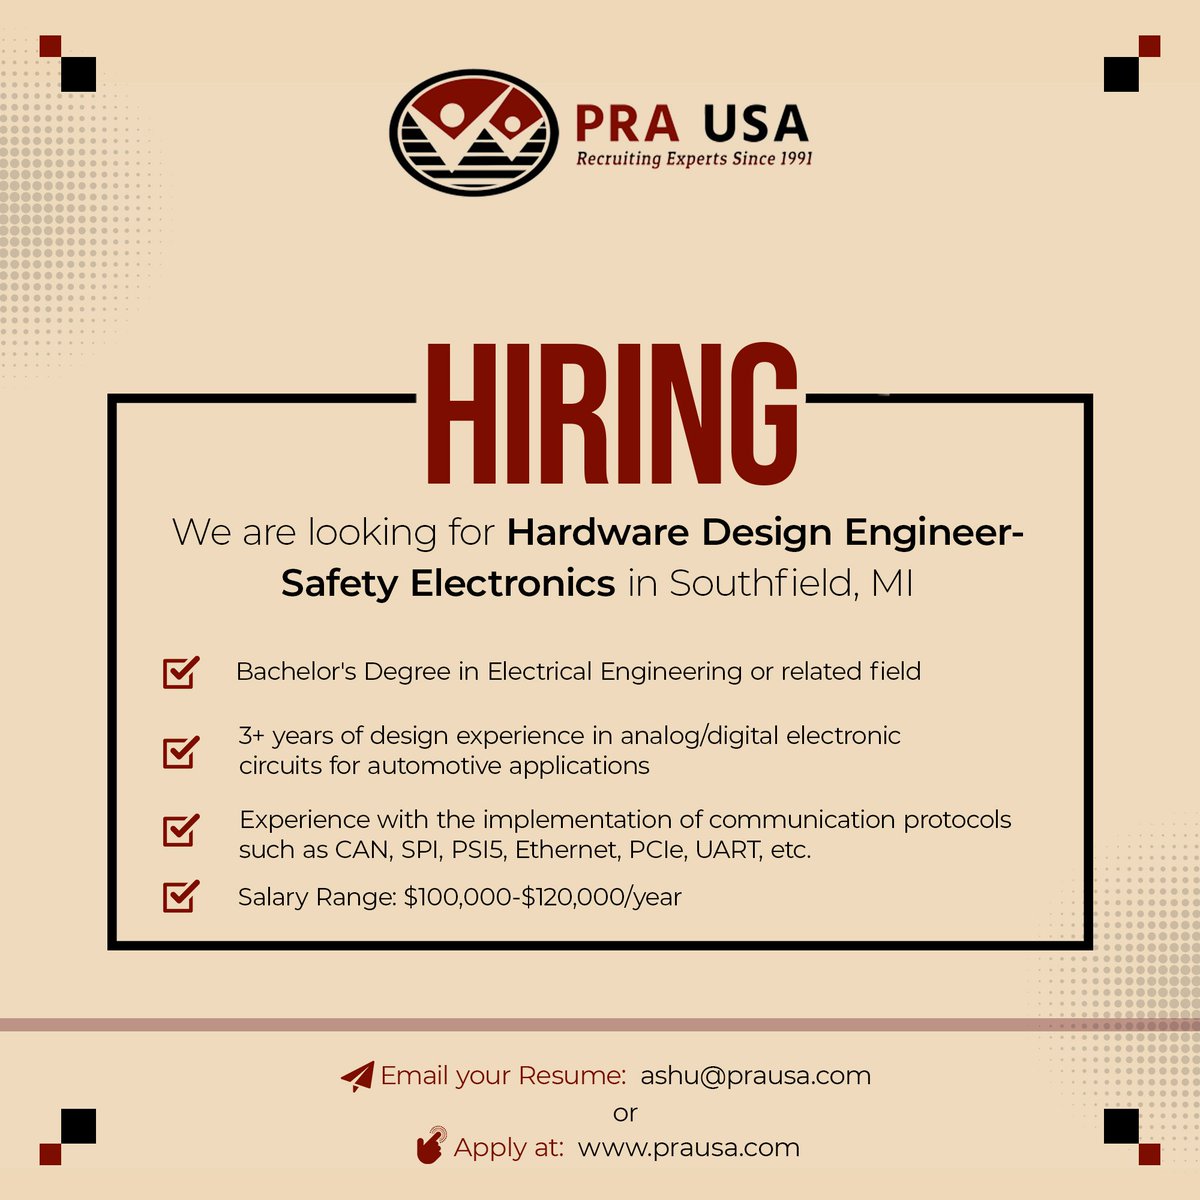 We are #hiring for 𝗛𝗮𝗿𝗱𝘄𝗮𝗿𝗲 𝗗𝗲𝘀𝗶𝗴𝗻 𝗘𝗻𝗴𝗶𝗻𝗲𝗲𝗿 - 𝗦𝗮𝗳𝗲𝘁𝘆 𝗘𝗹𝗲𝗰𝘁𝗿𝗼𝗻𝗶𝗰𝘀 in Southfield, MI. Apply here: bit.ly/3xurML6

#hardwareengineer
#designengineer
#hardwarejobs
#safetyjobs
#electronicsjobs
#engineeringcareers
#michiganjobs
#prausa